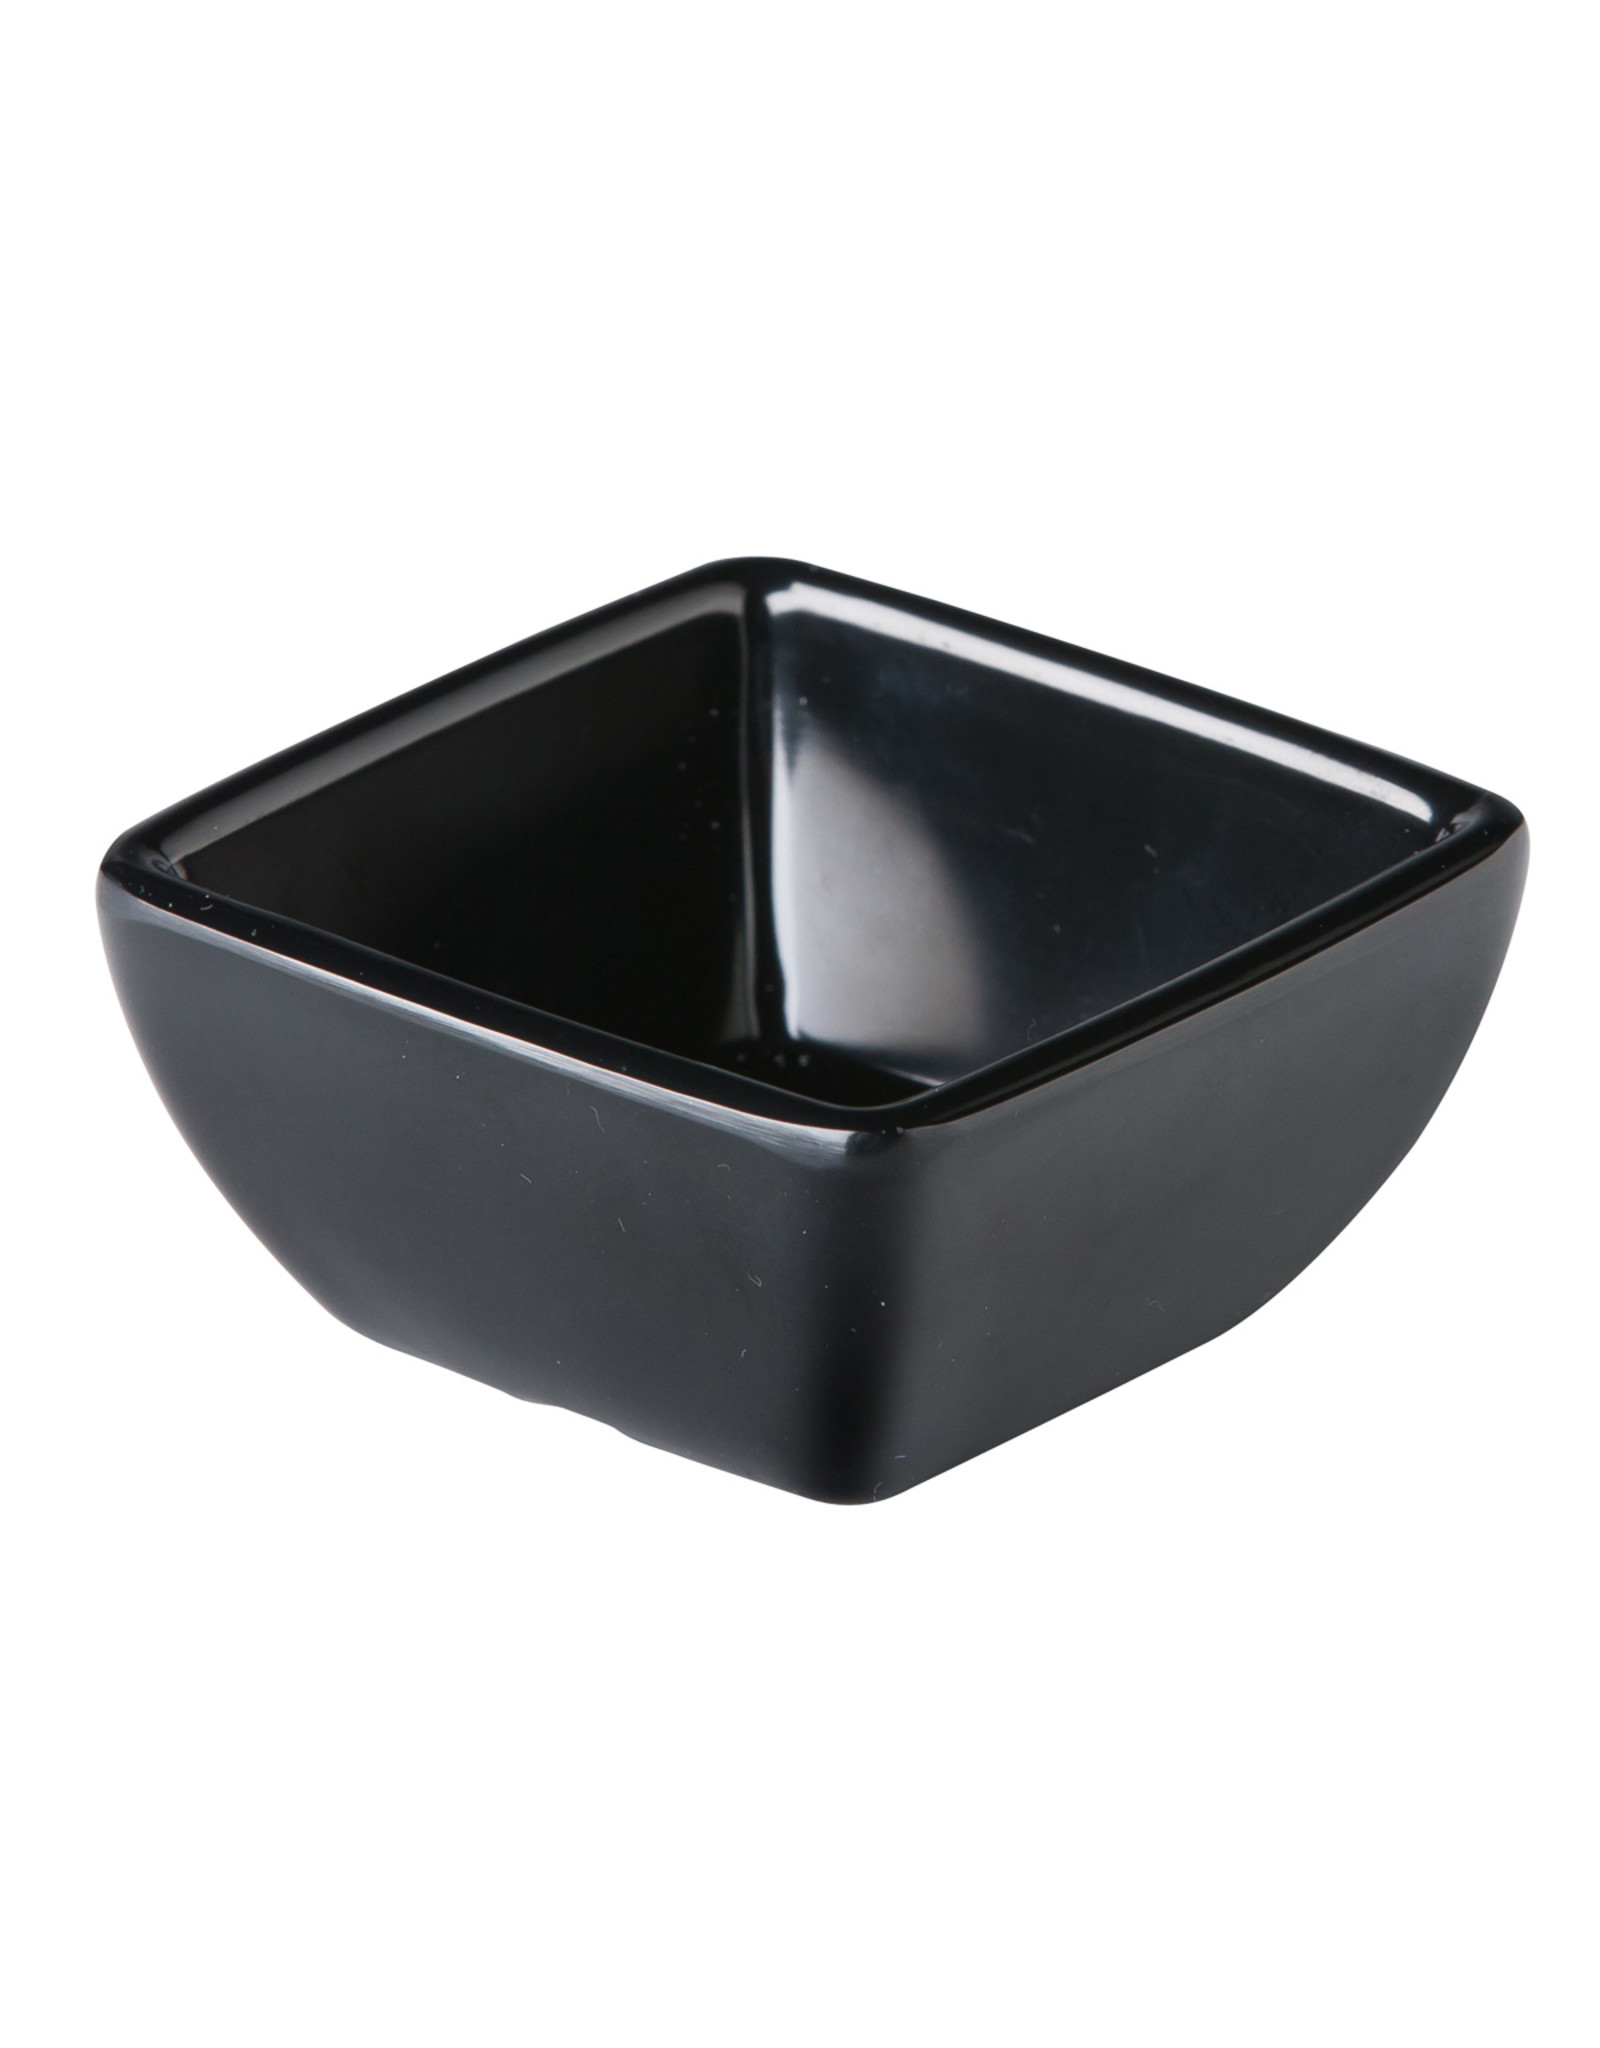 Stylepoint Melamine curved square bowl black 6,3 x 6,3 x 3 cm